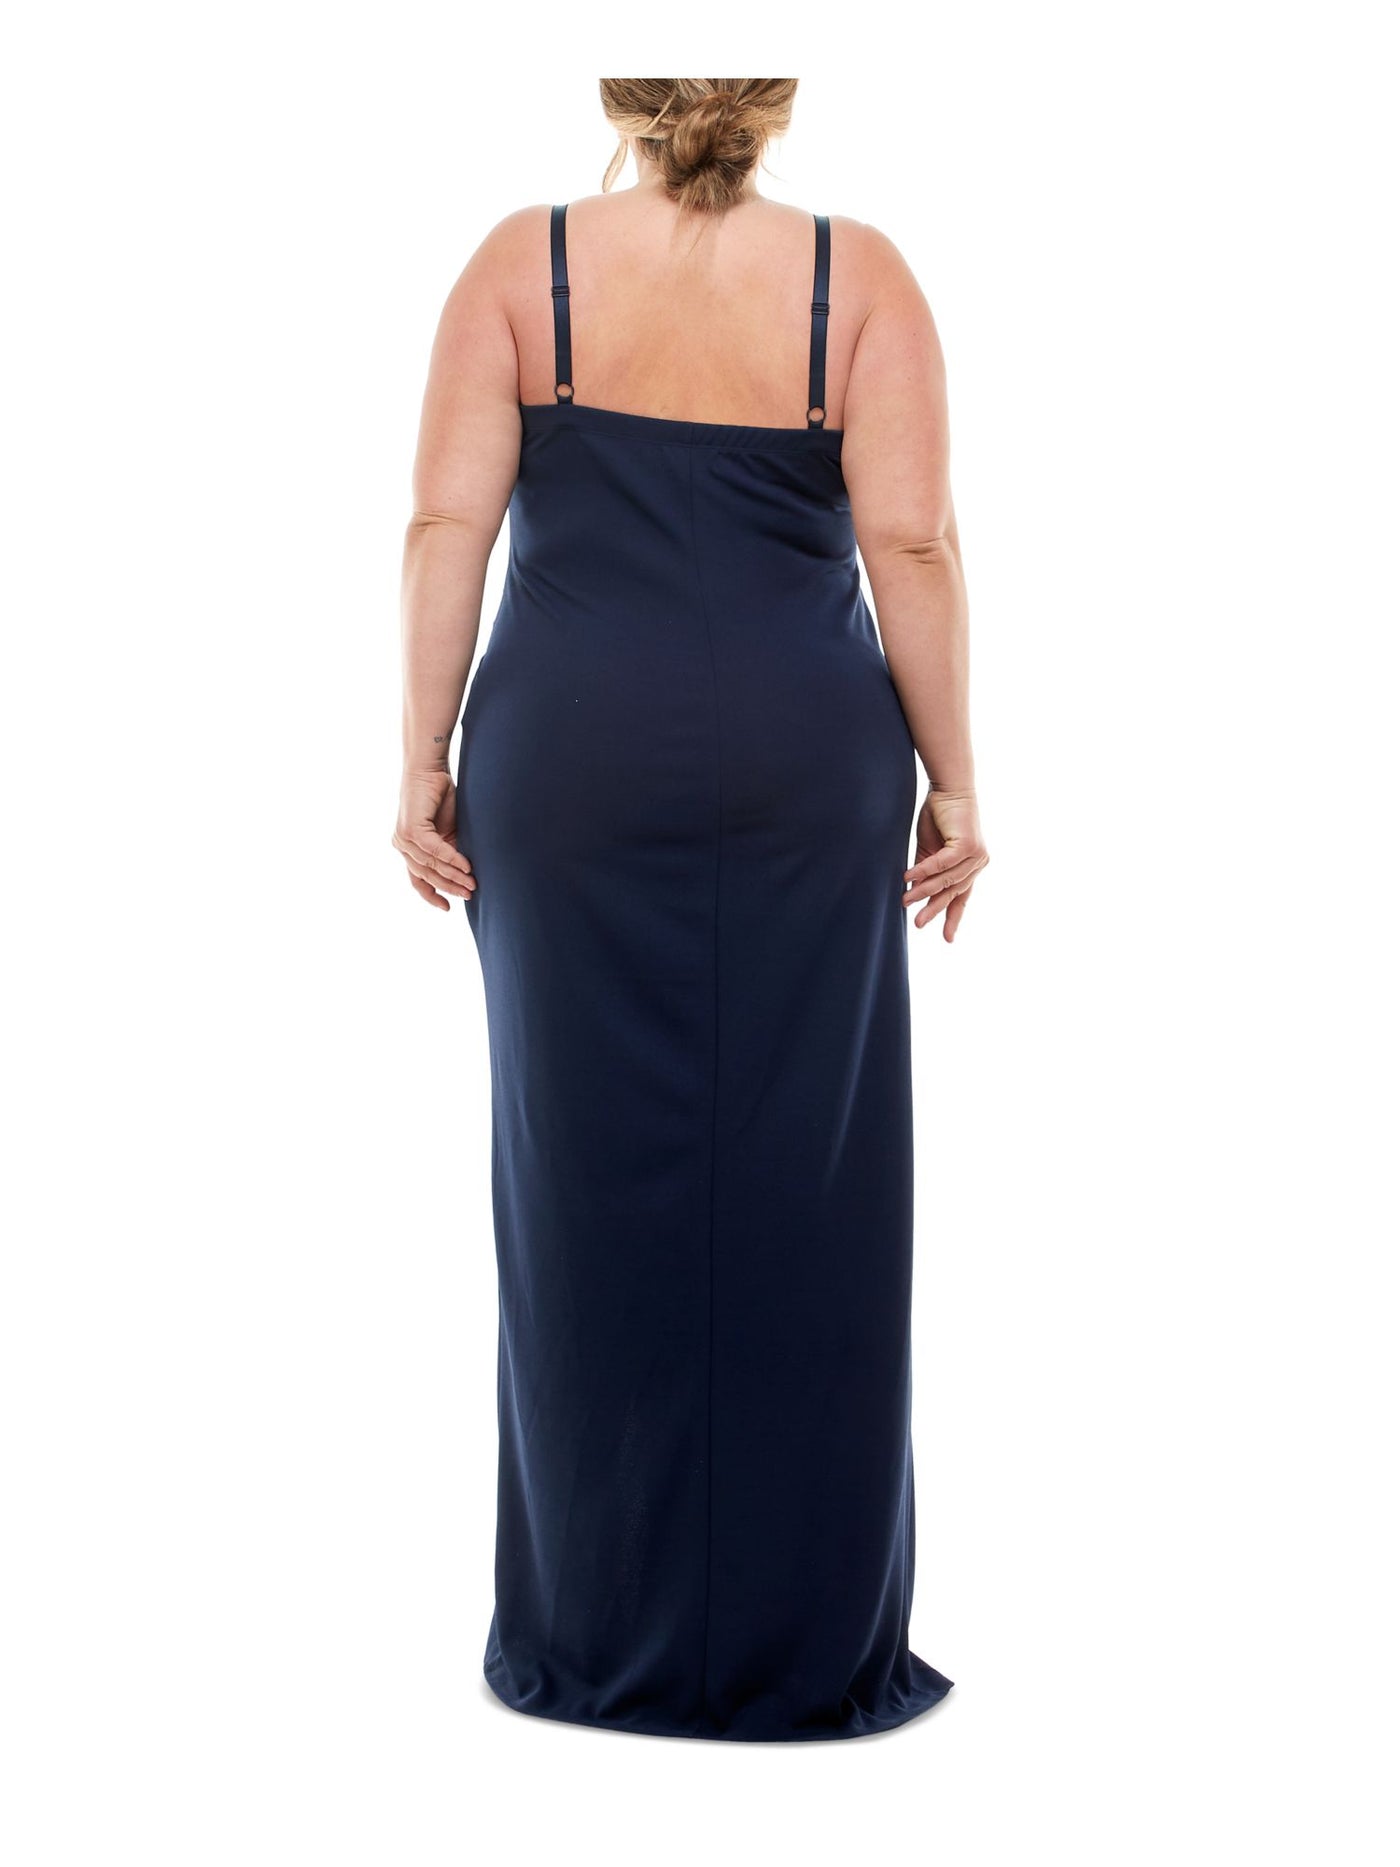 EMERALD SUNDAE Womens Navy Pleated Adjustable Faux-wrap Skirt Sleeveless Square Neck Maxi Party Body Con Dress 18